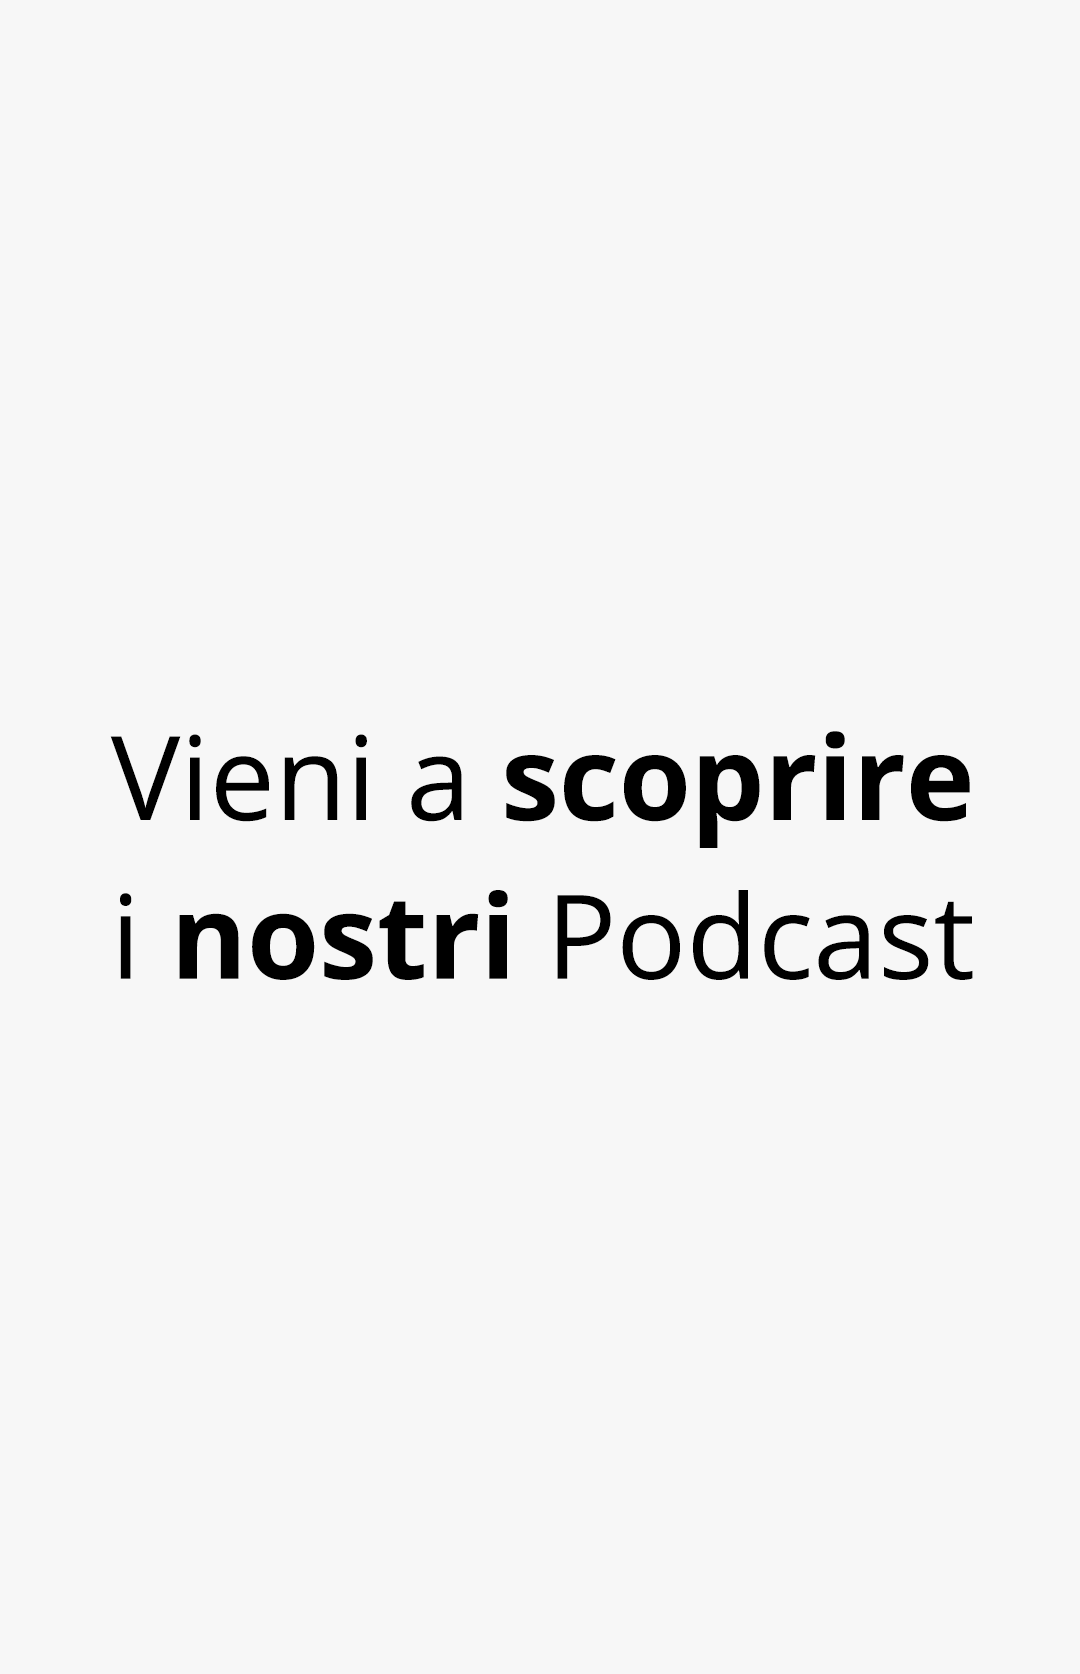 Podcast Nenni